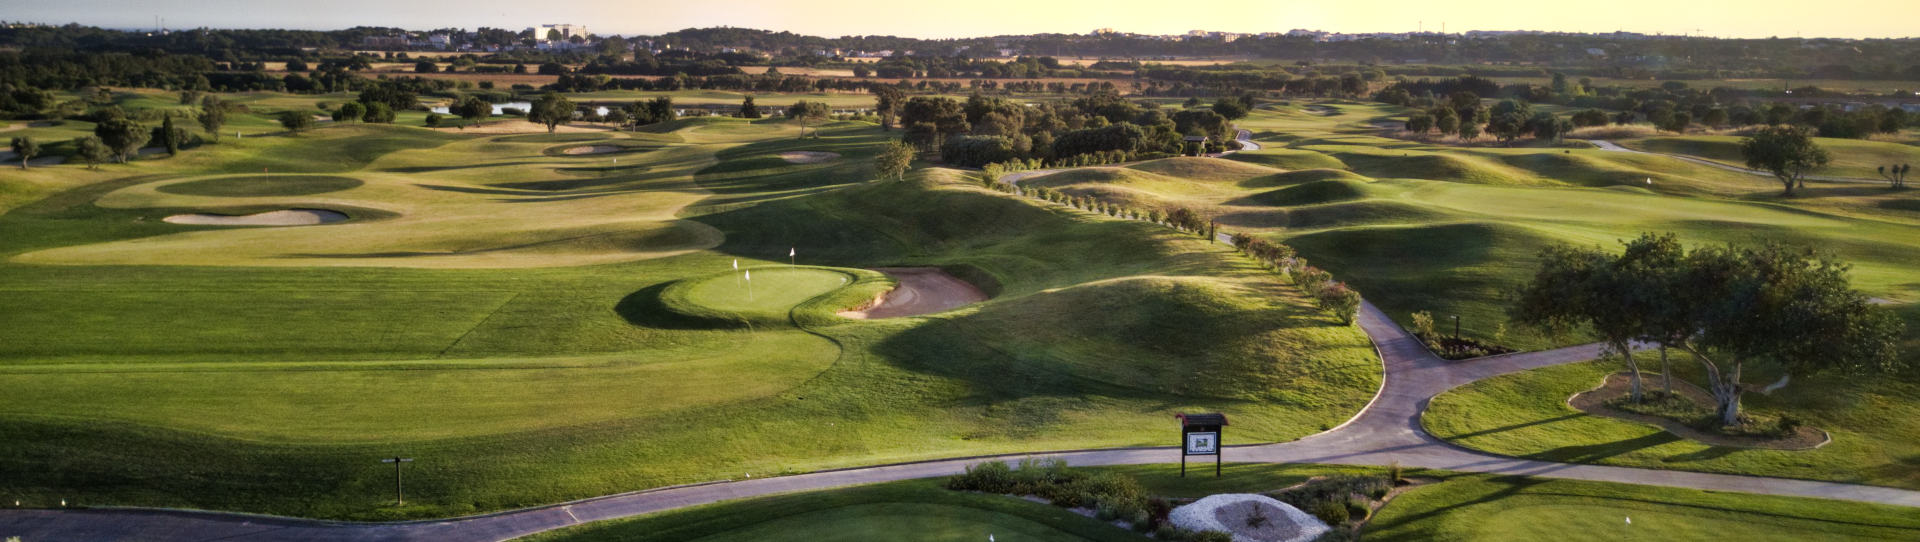 Portugal golf courses - Vilamoura Victoria golf course - Photo 3